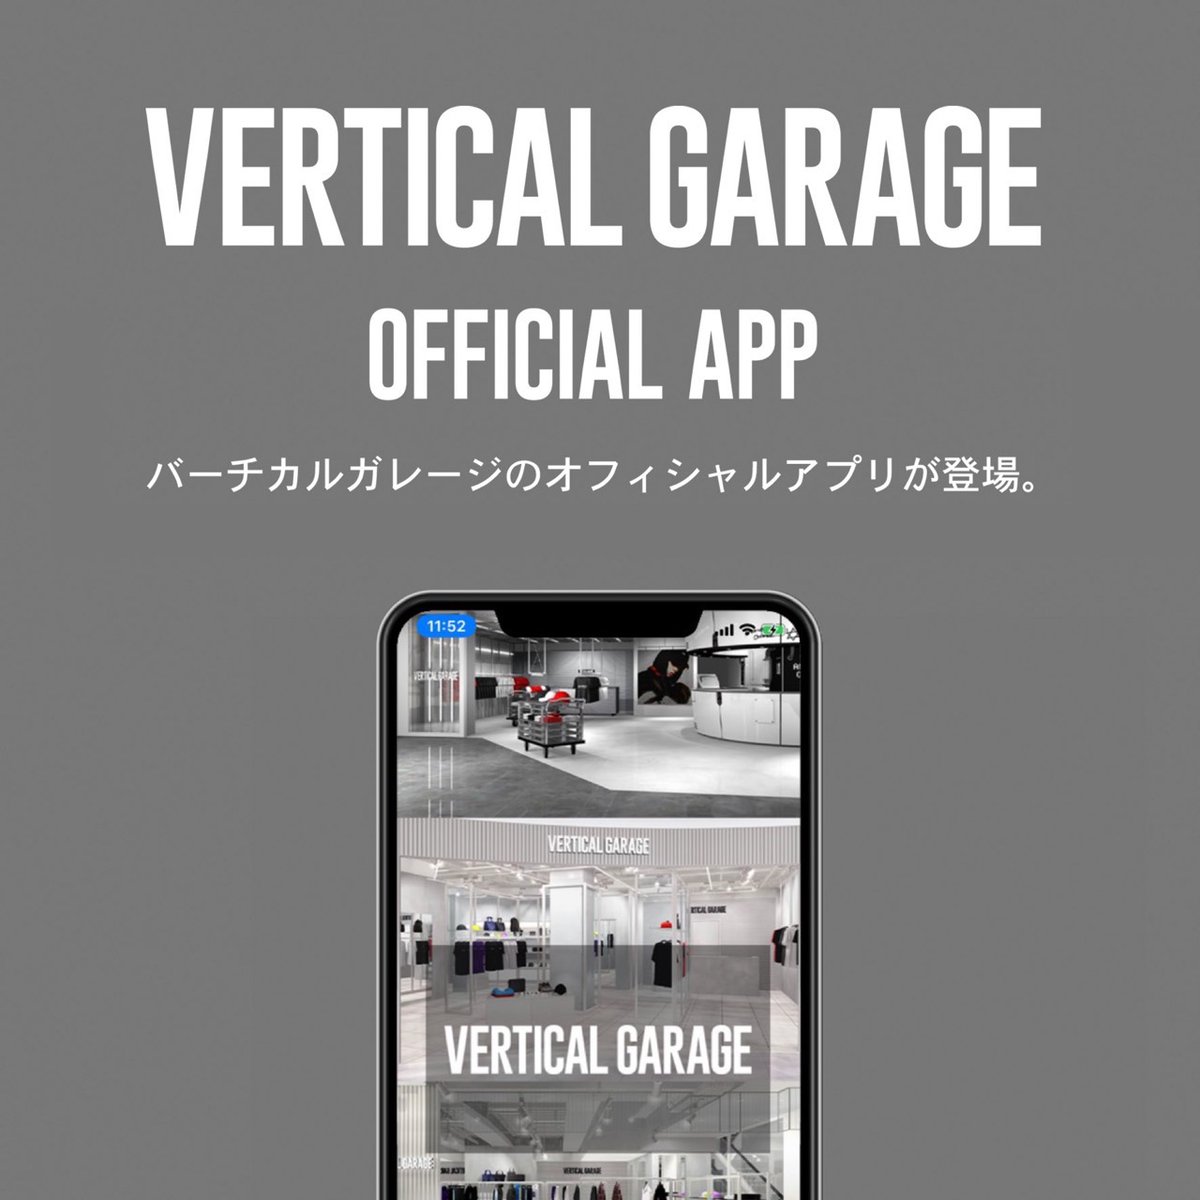 24karats V Twitter Vertical Garage App J S B 24karats Pkcz等を取り扱うvertical Garageより ポイント機能付きvertical Garage公式アプリが登場 ダウンロードしていただくとアプリ限定のオリジナル壁紙 オリジナルフォトフレームをプレゼント